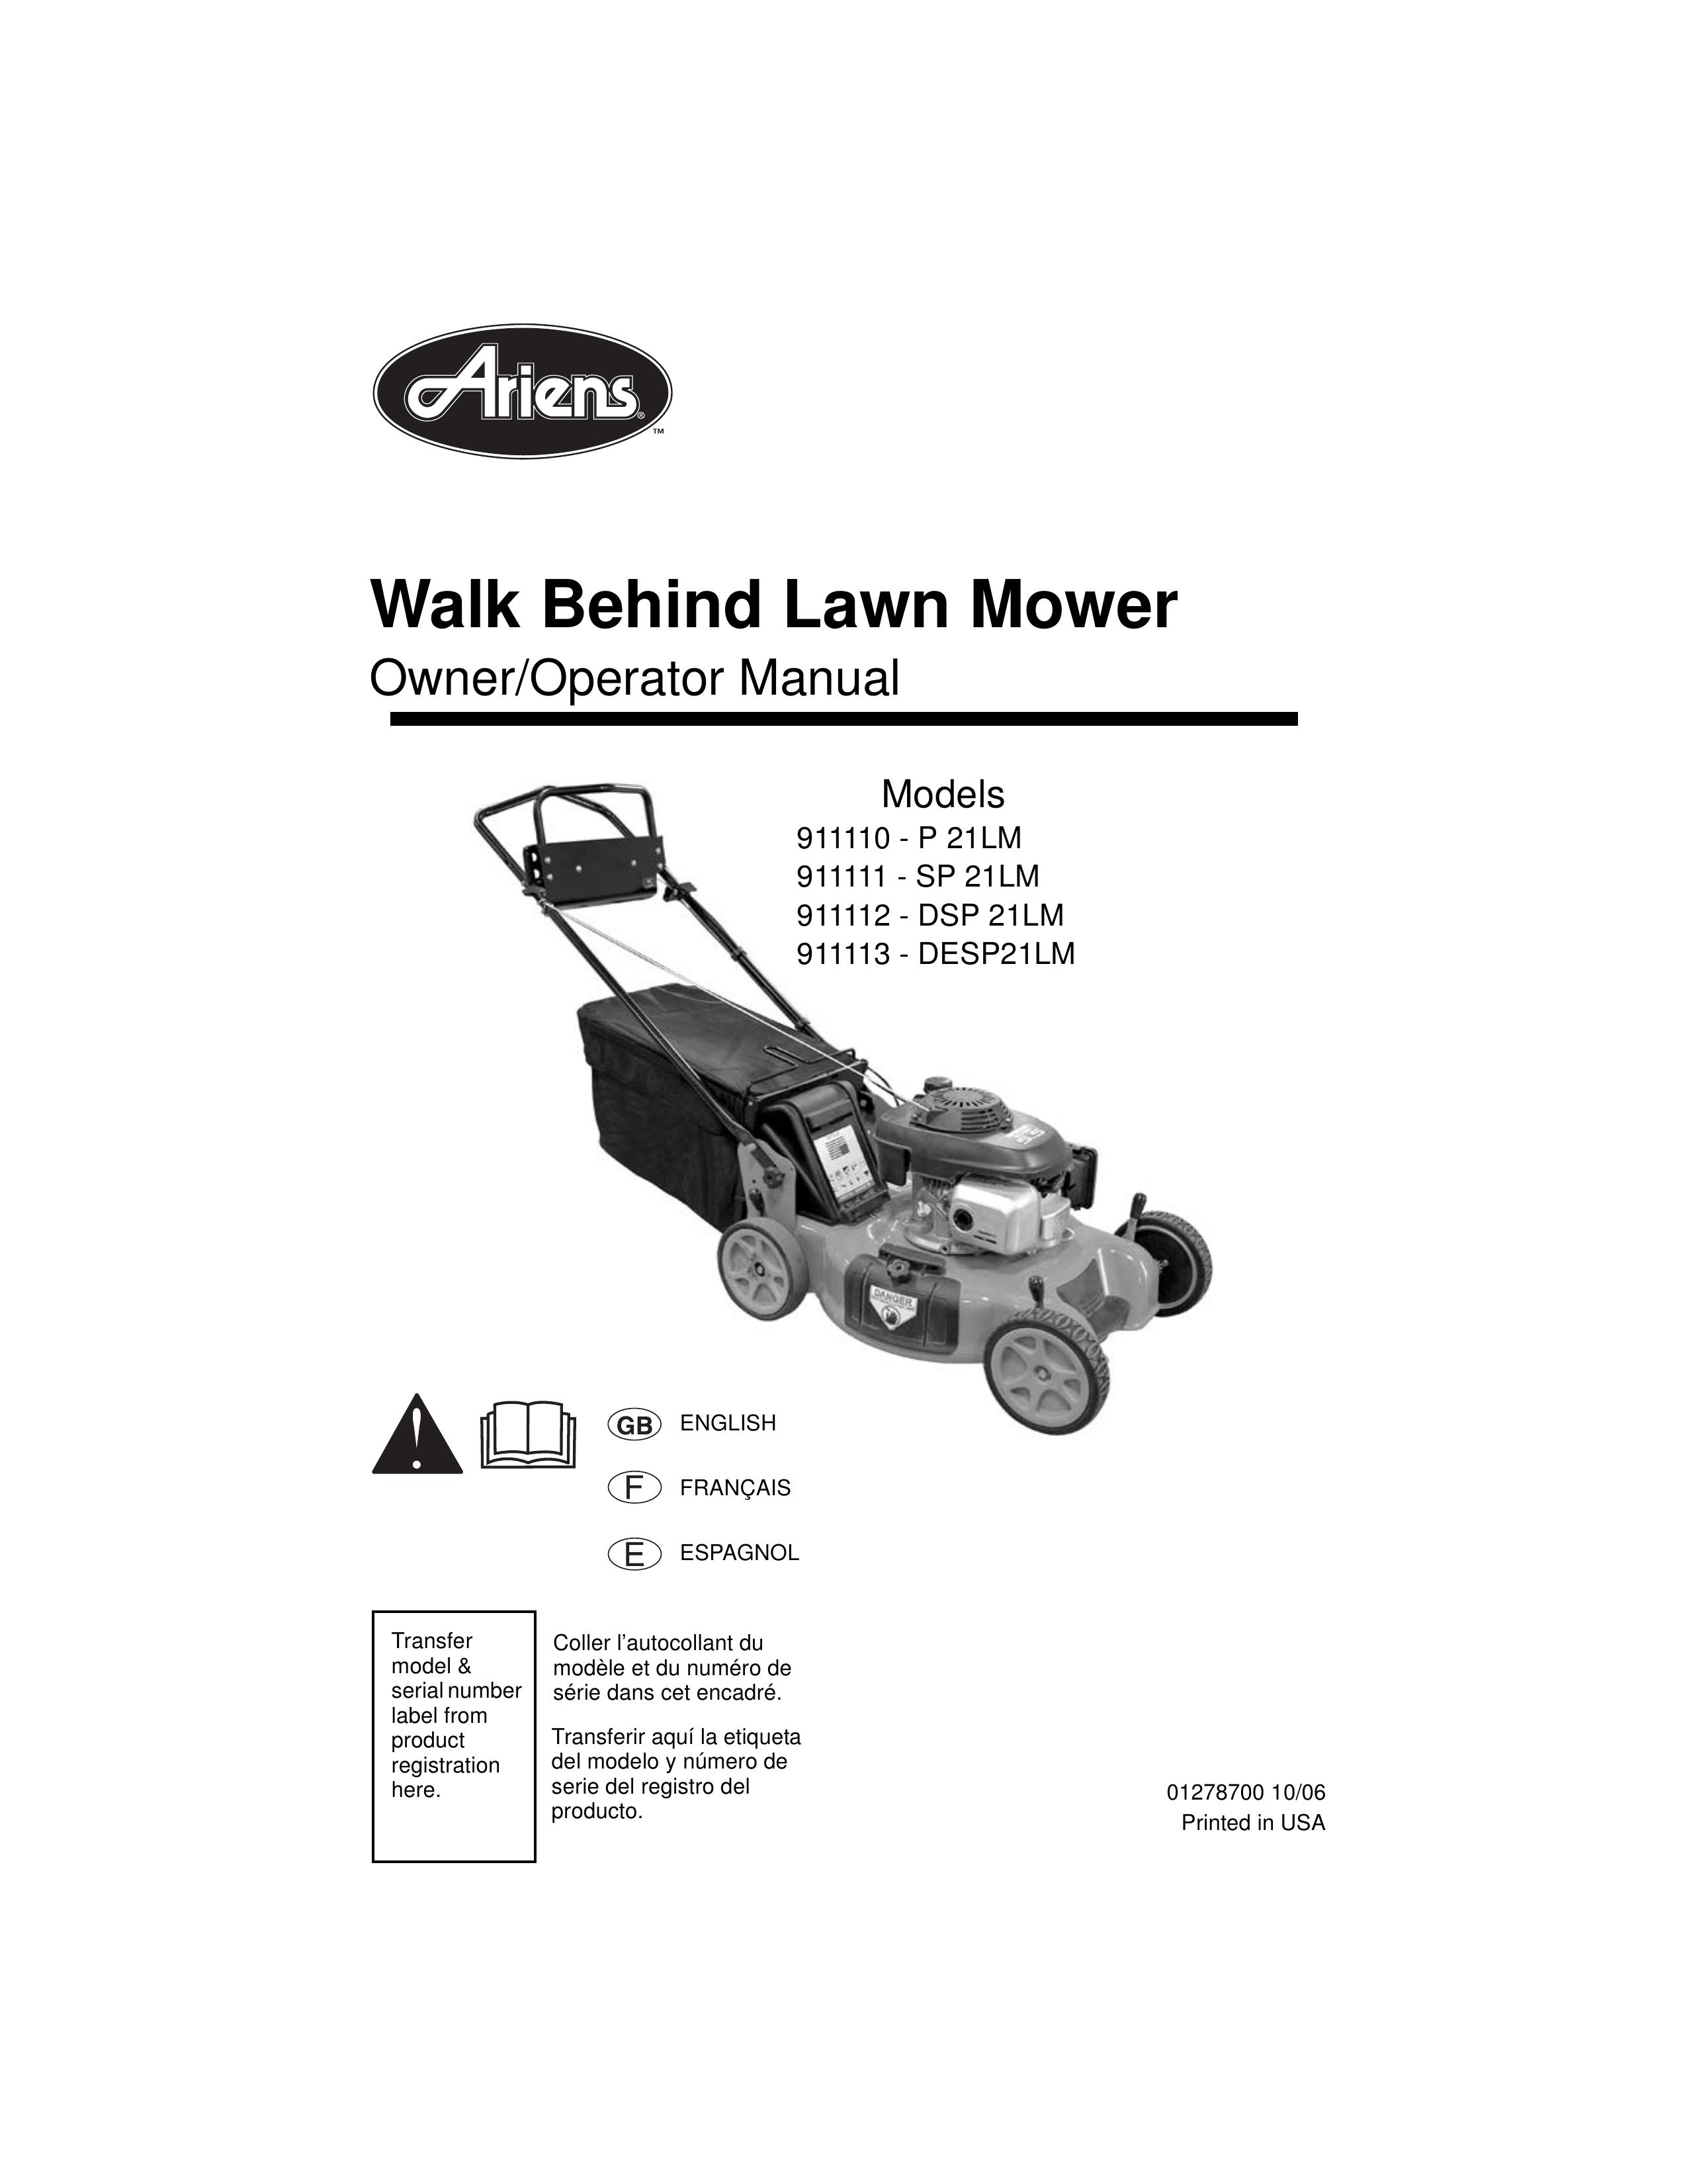 Ariens 911110 - P 21LM Lawn Mower User Manual